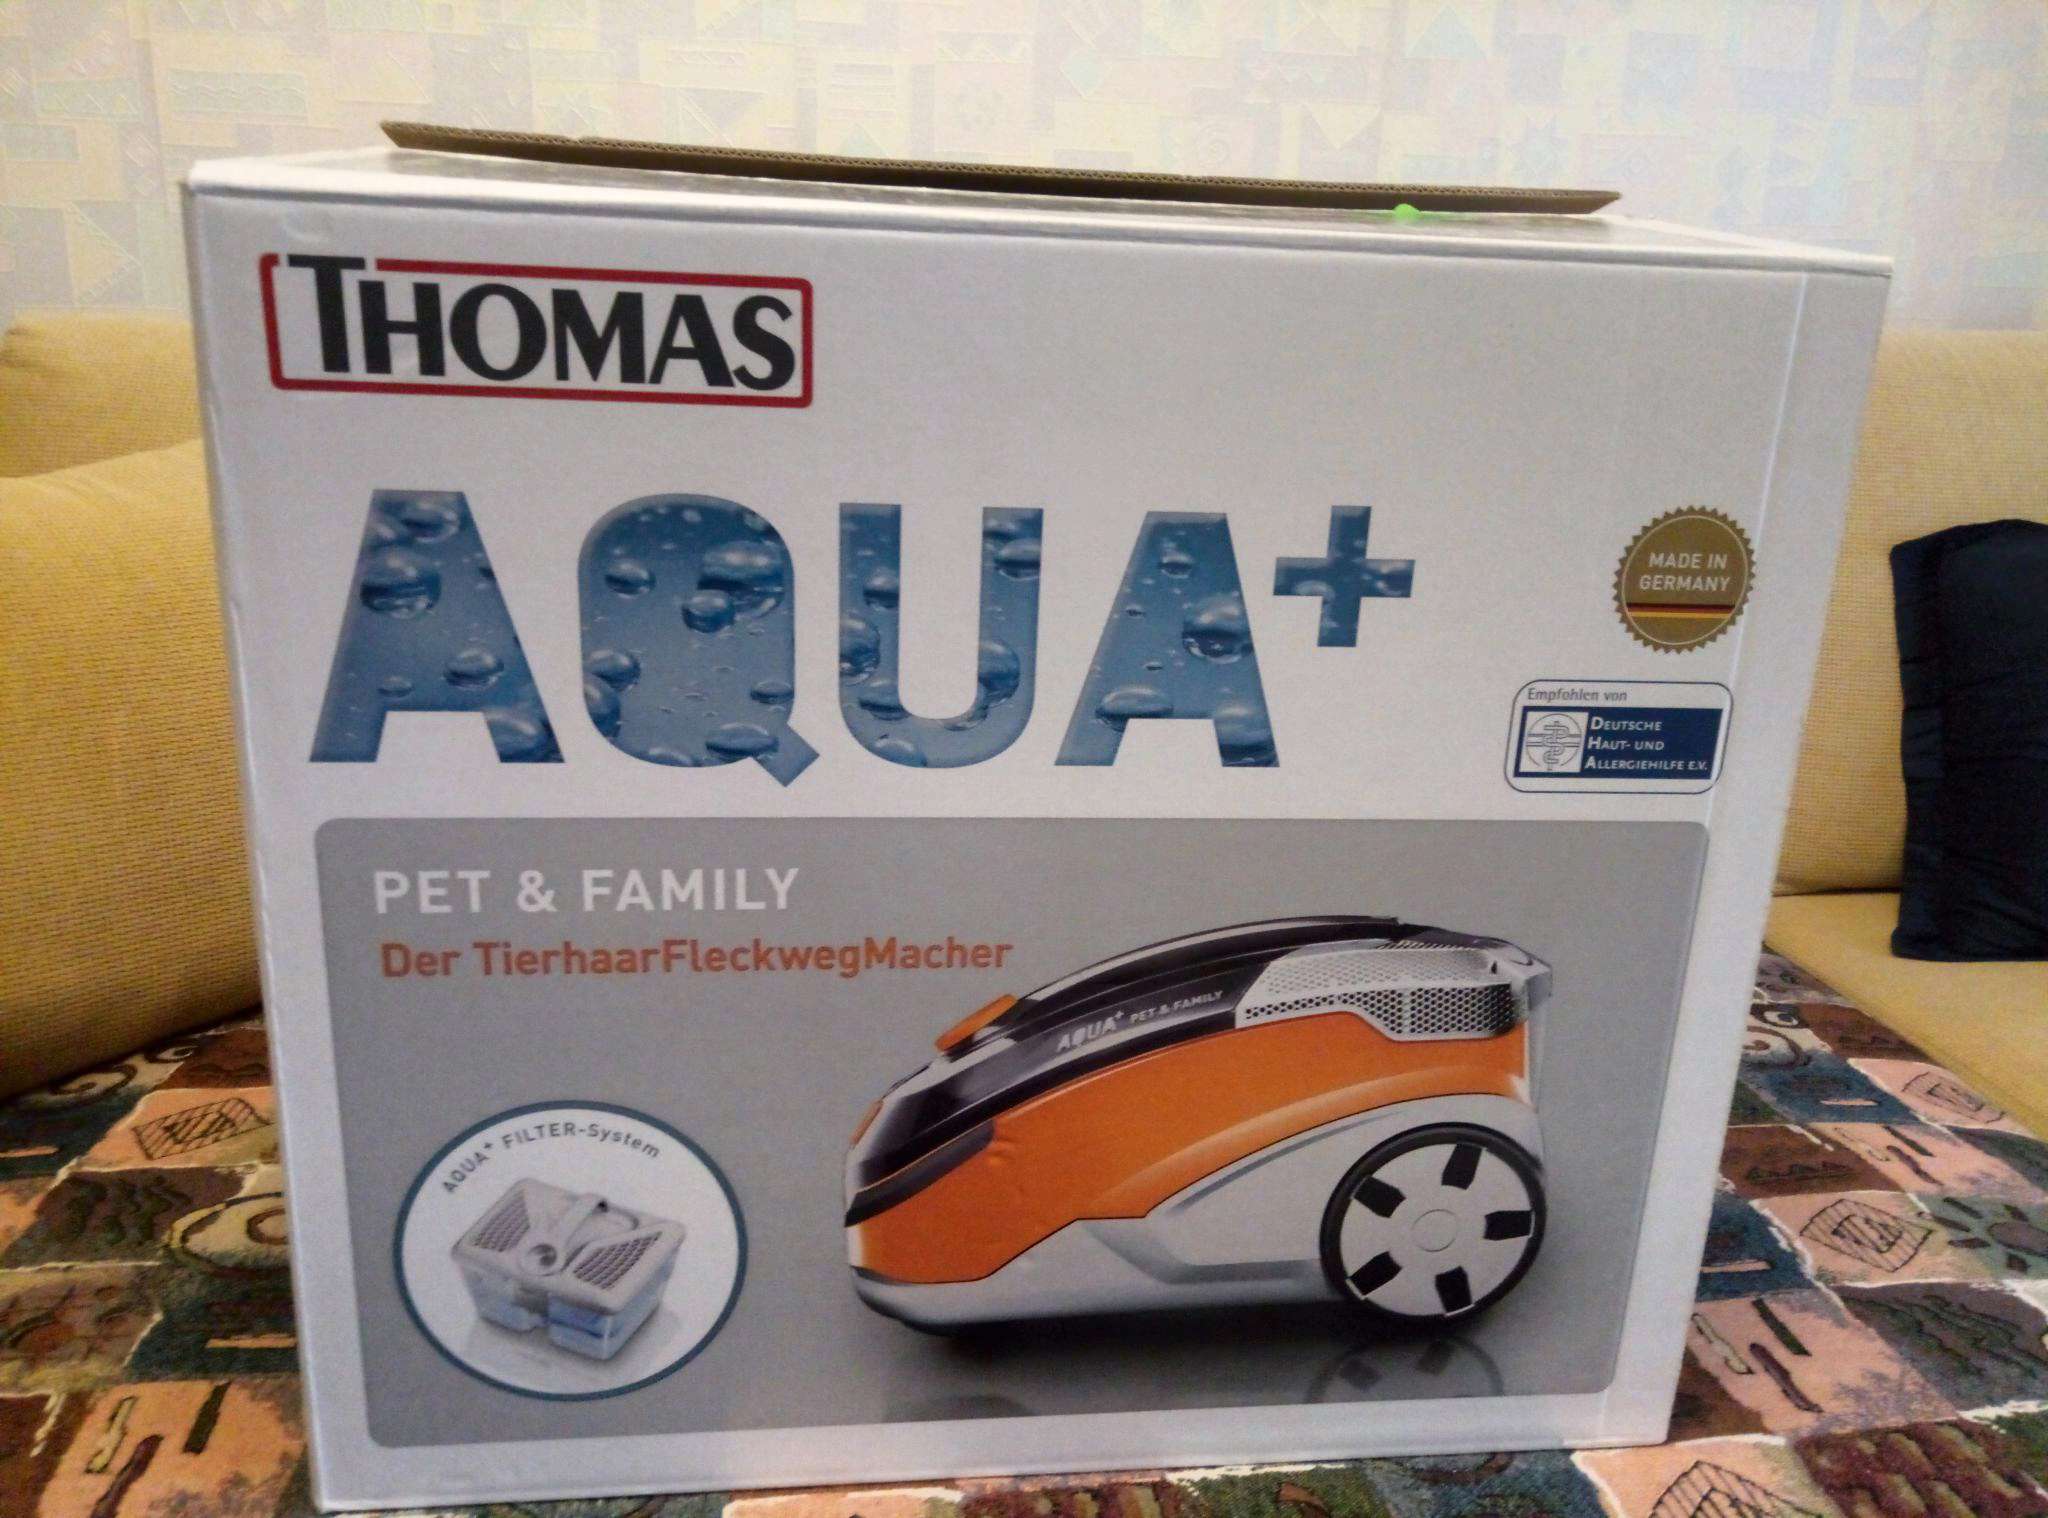 Thomas pet family купить. Пылесос Thomas Aqua Pet & Family. Пылесос Thomas Aqua Pet&Family parquet Pro. Моющий пылесос Thomas Pet Family Plus.